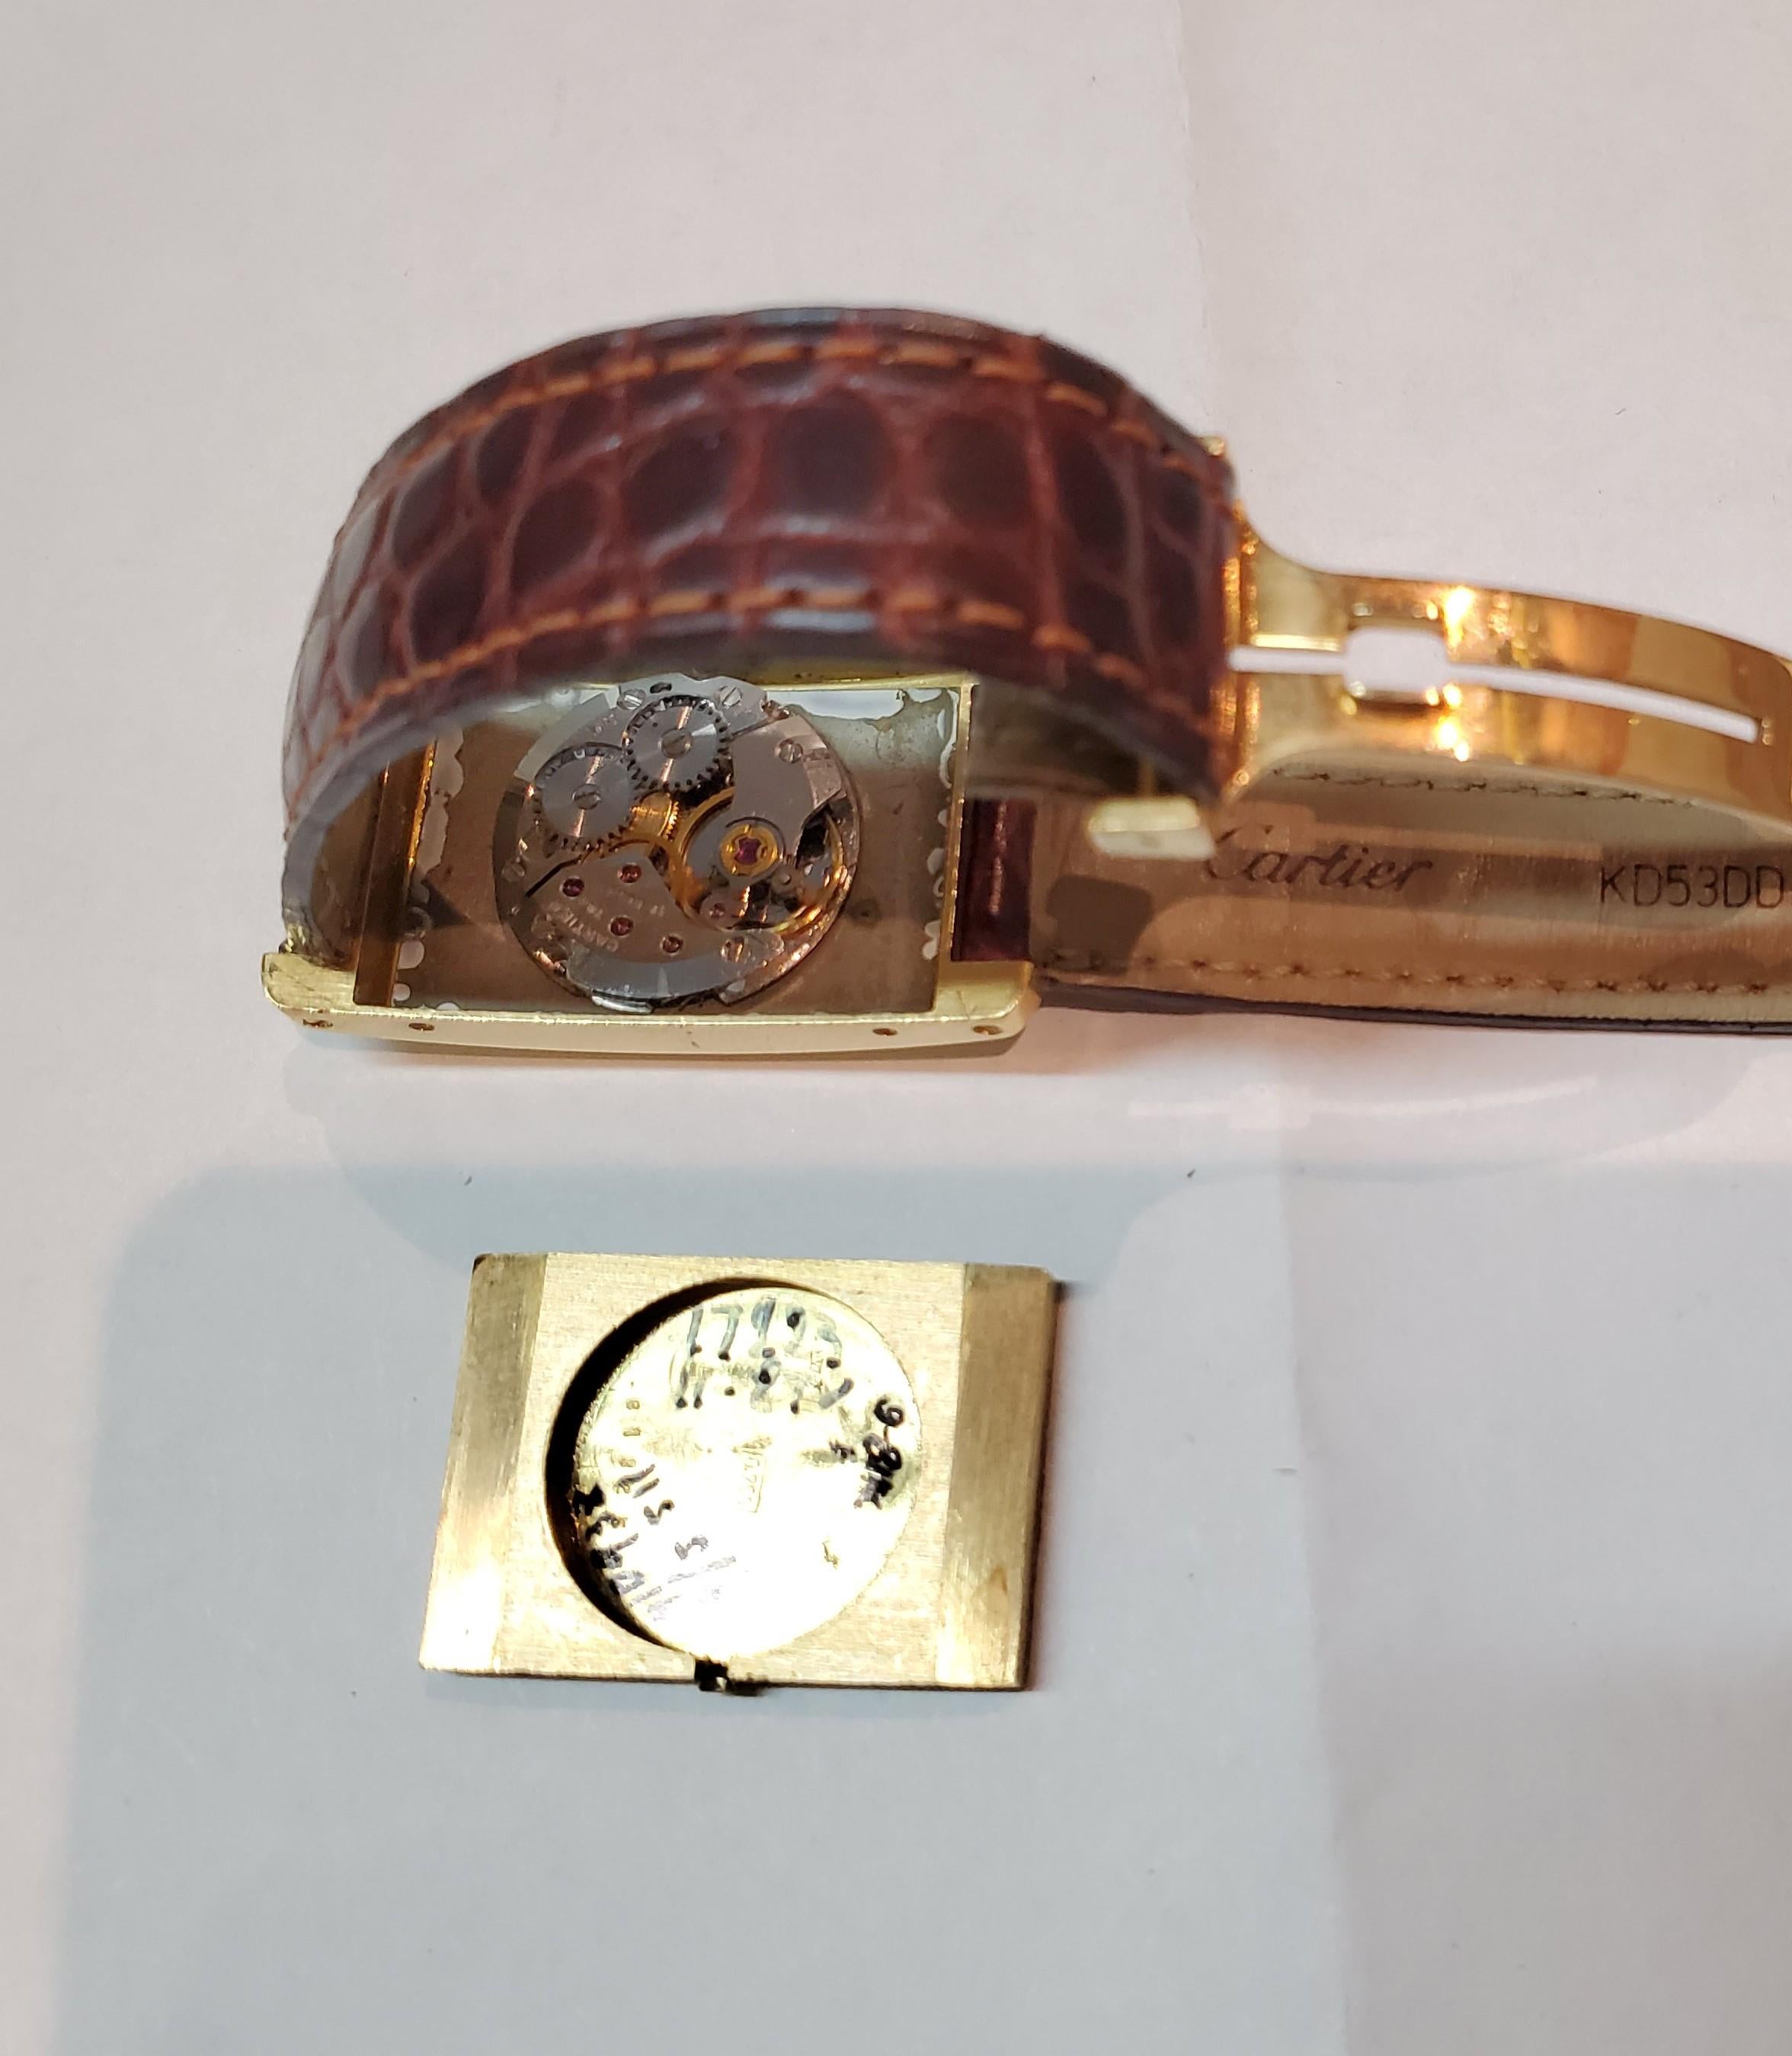 Solid 18 Karat Yellow Gold Cartier Tank Watch, 031795, France, 61825, 17 Jewel 5